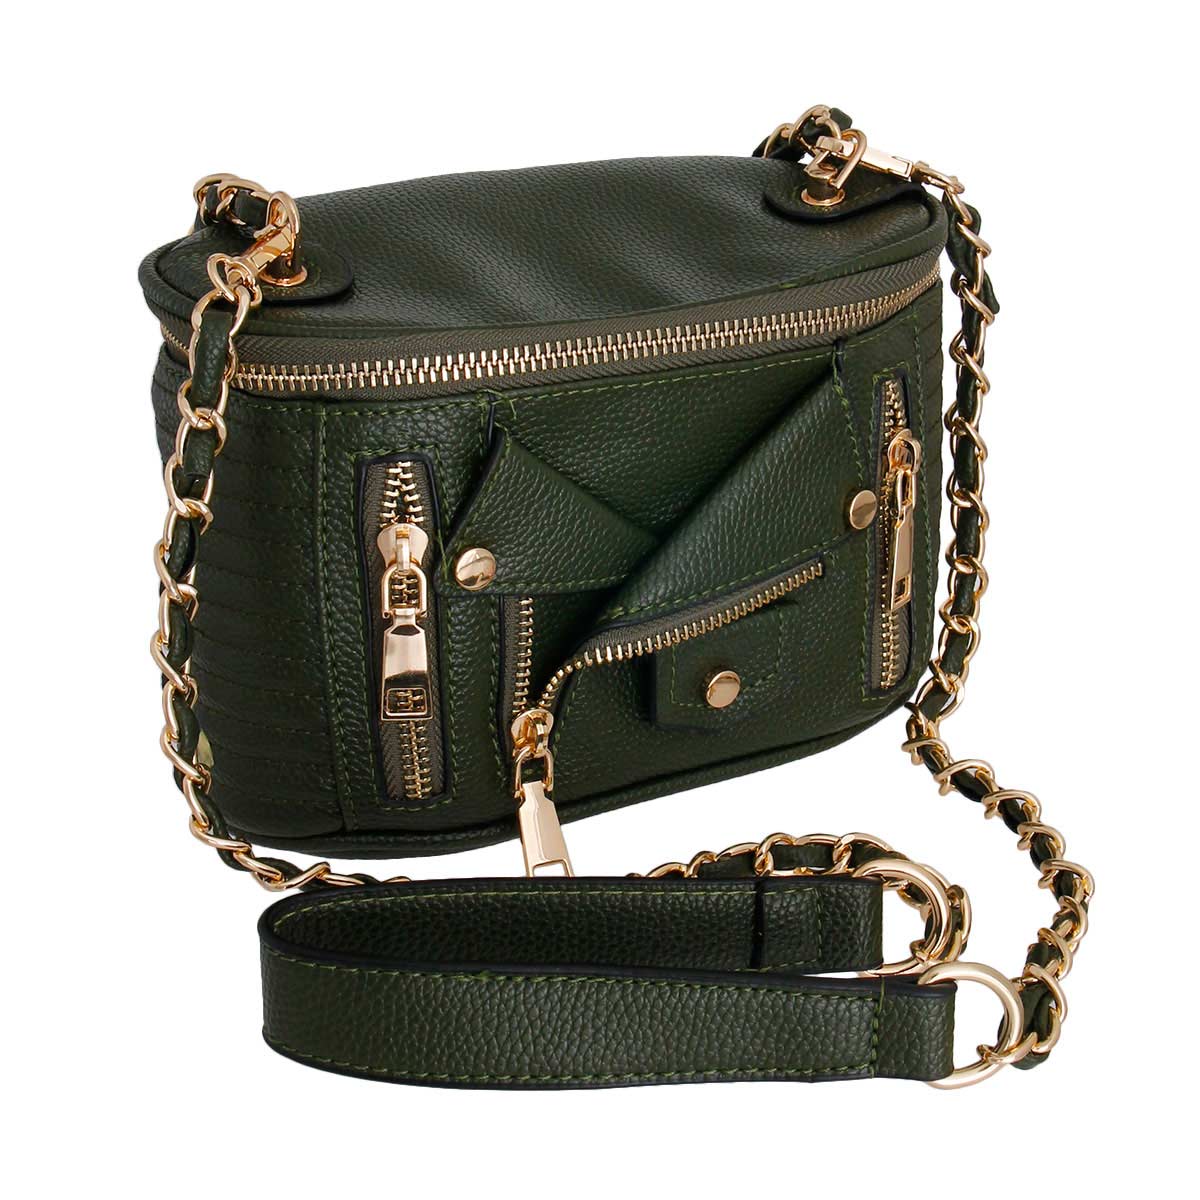 Olive Moto Cosmetic Bag Shaped Handbag